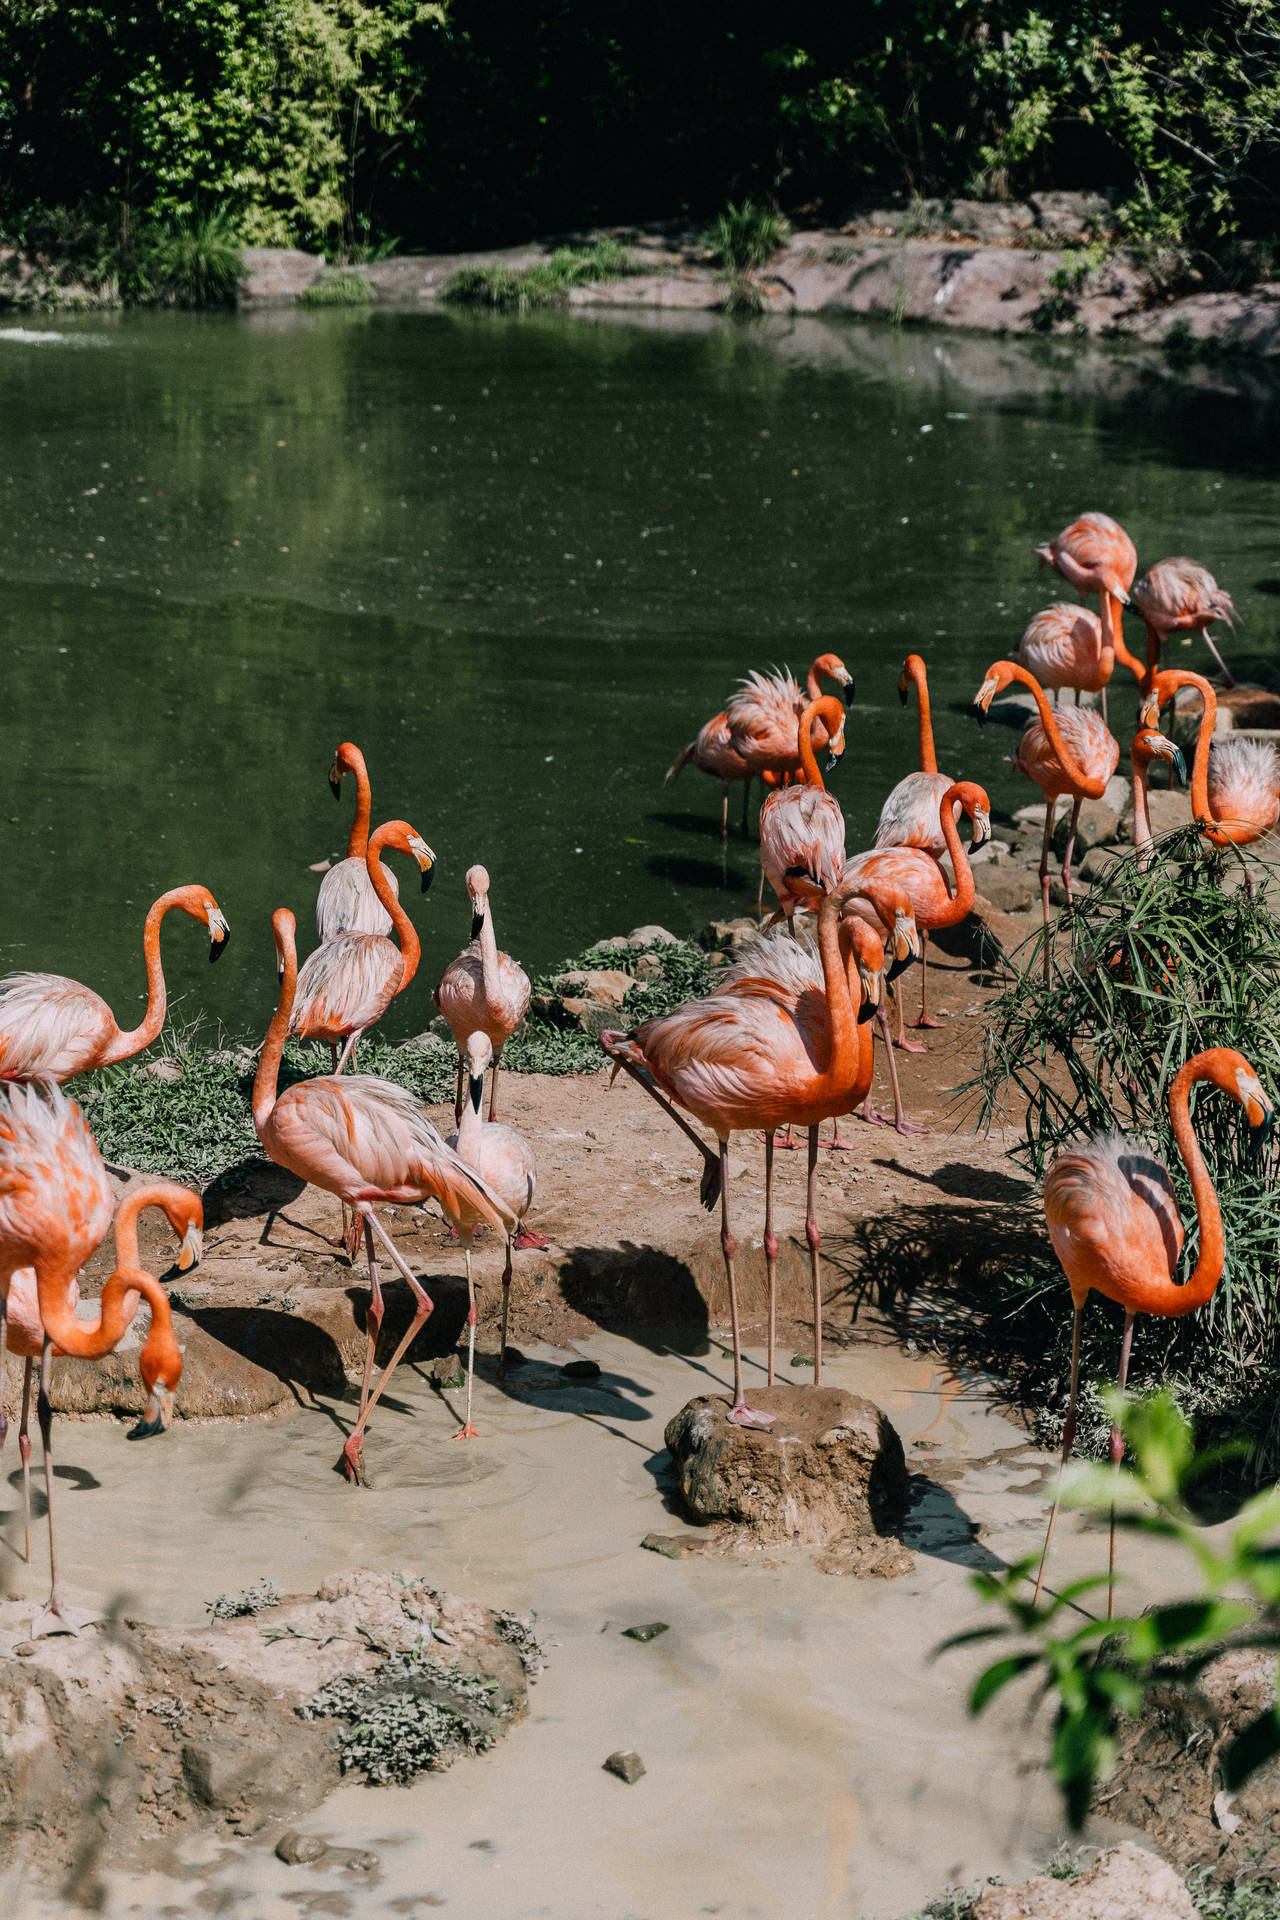 Coolest Iphone Flamingo Background